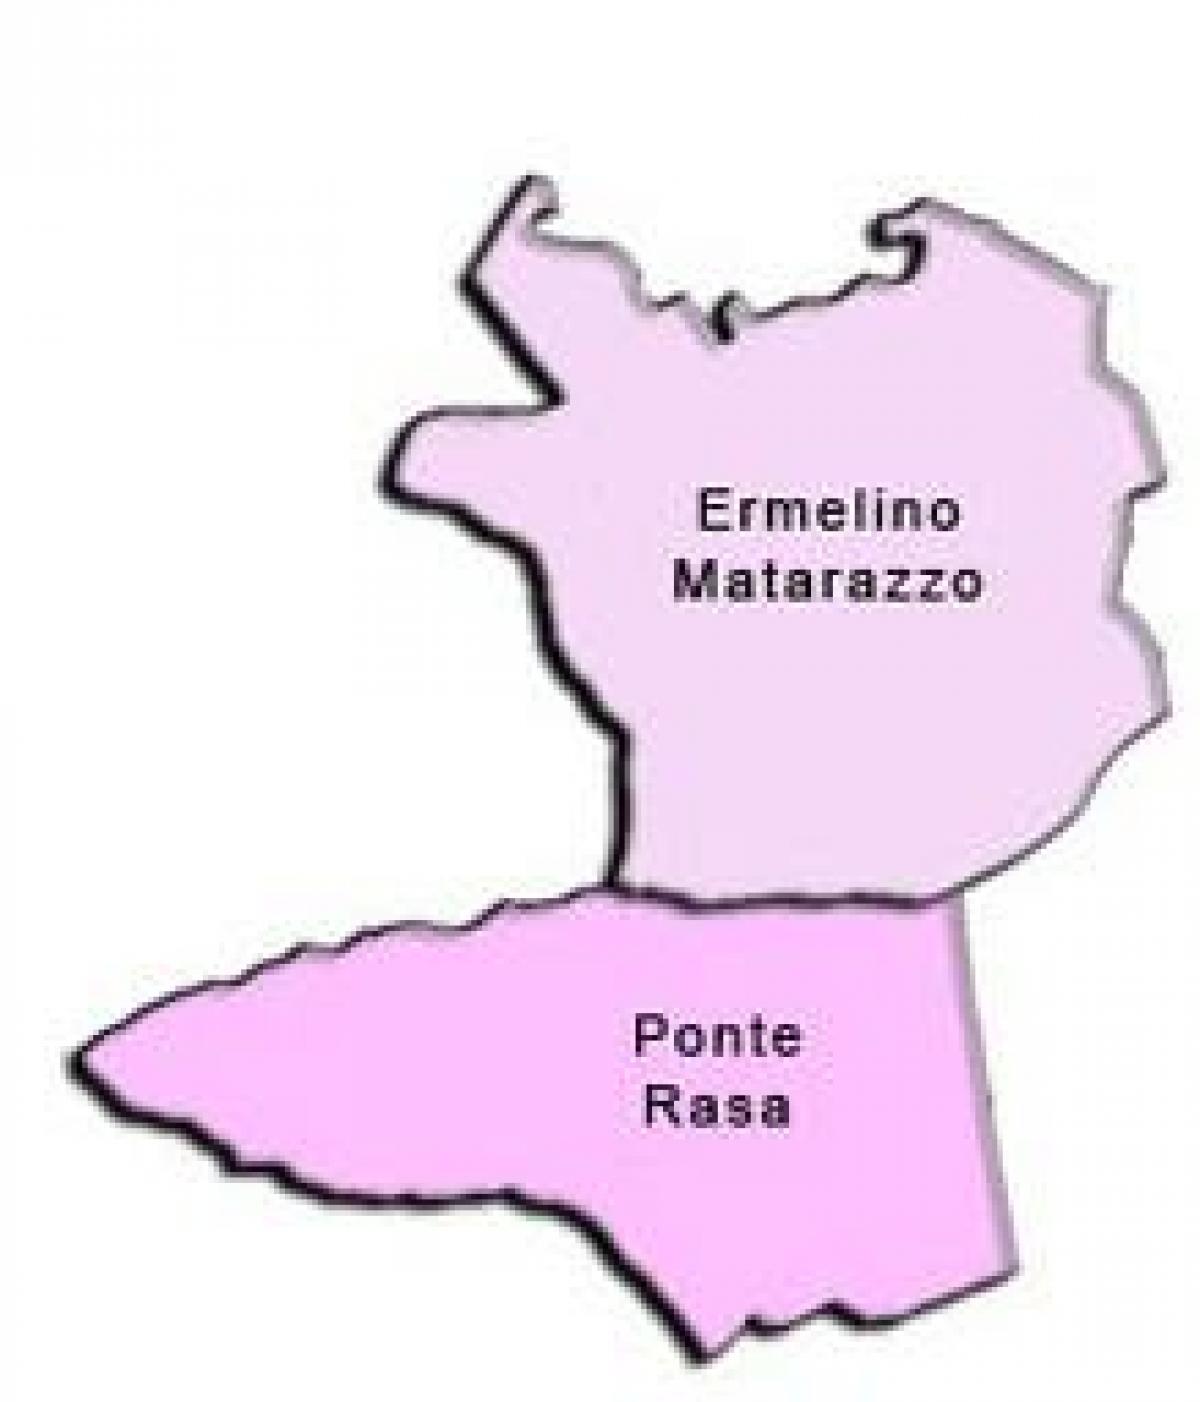 Kaart van Ermelino Matarazzo sub-prefektuur